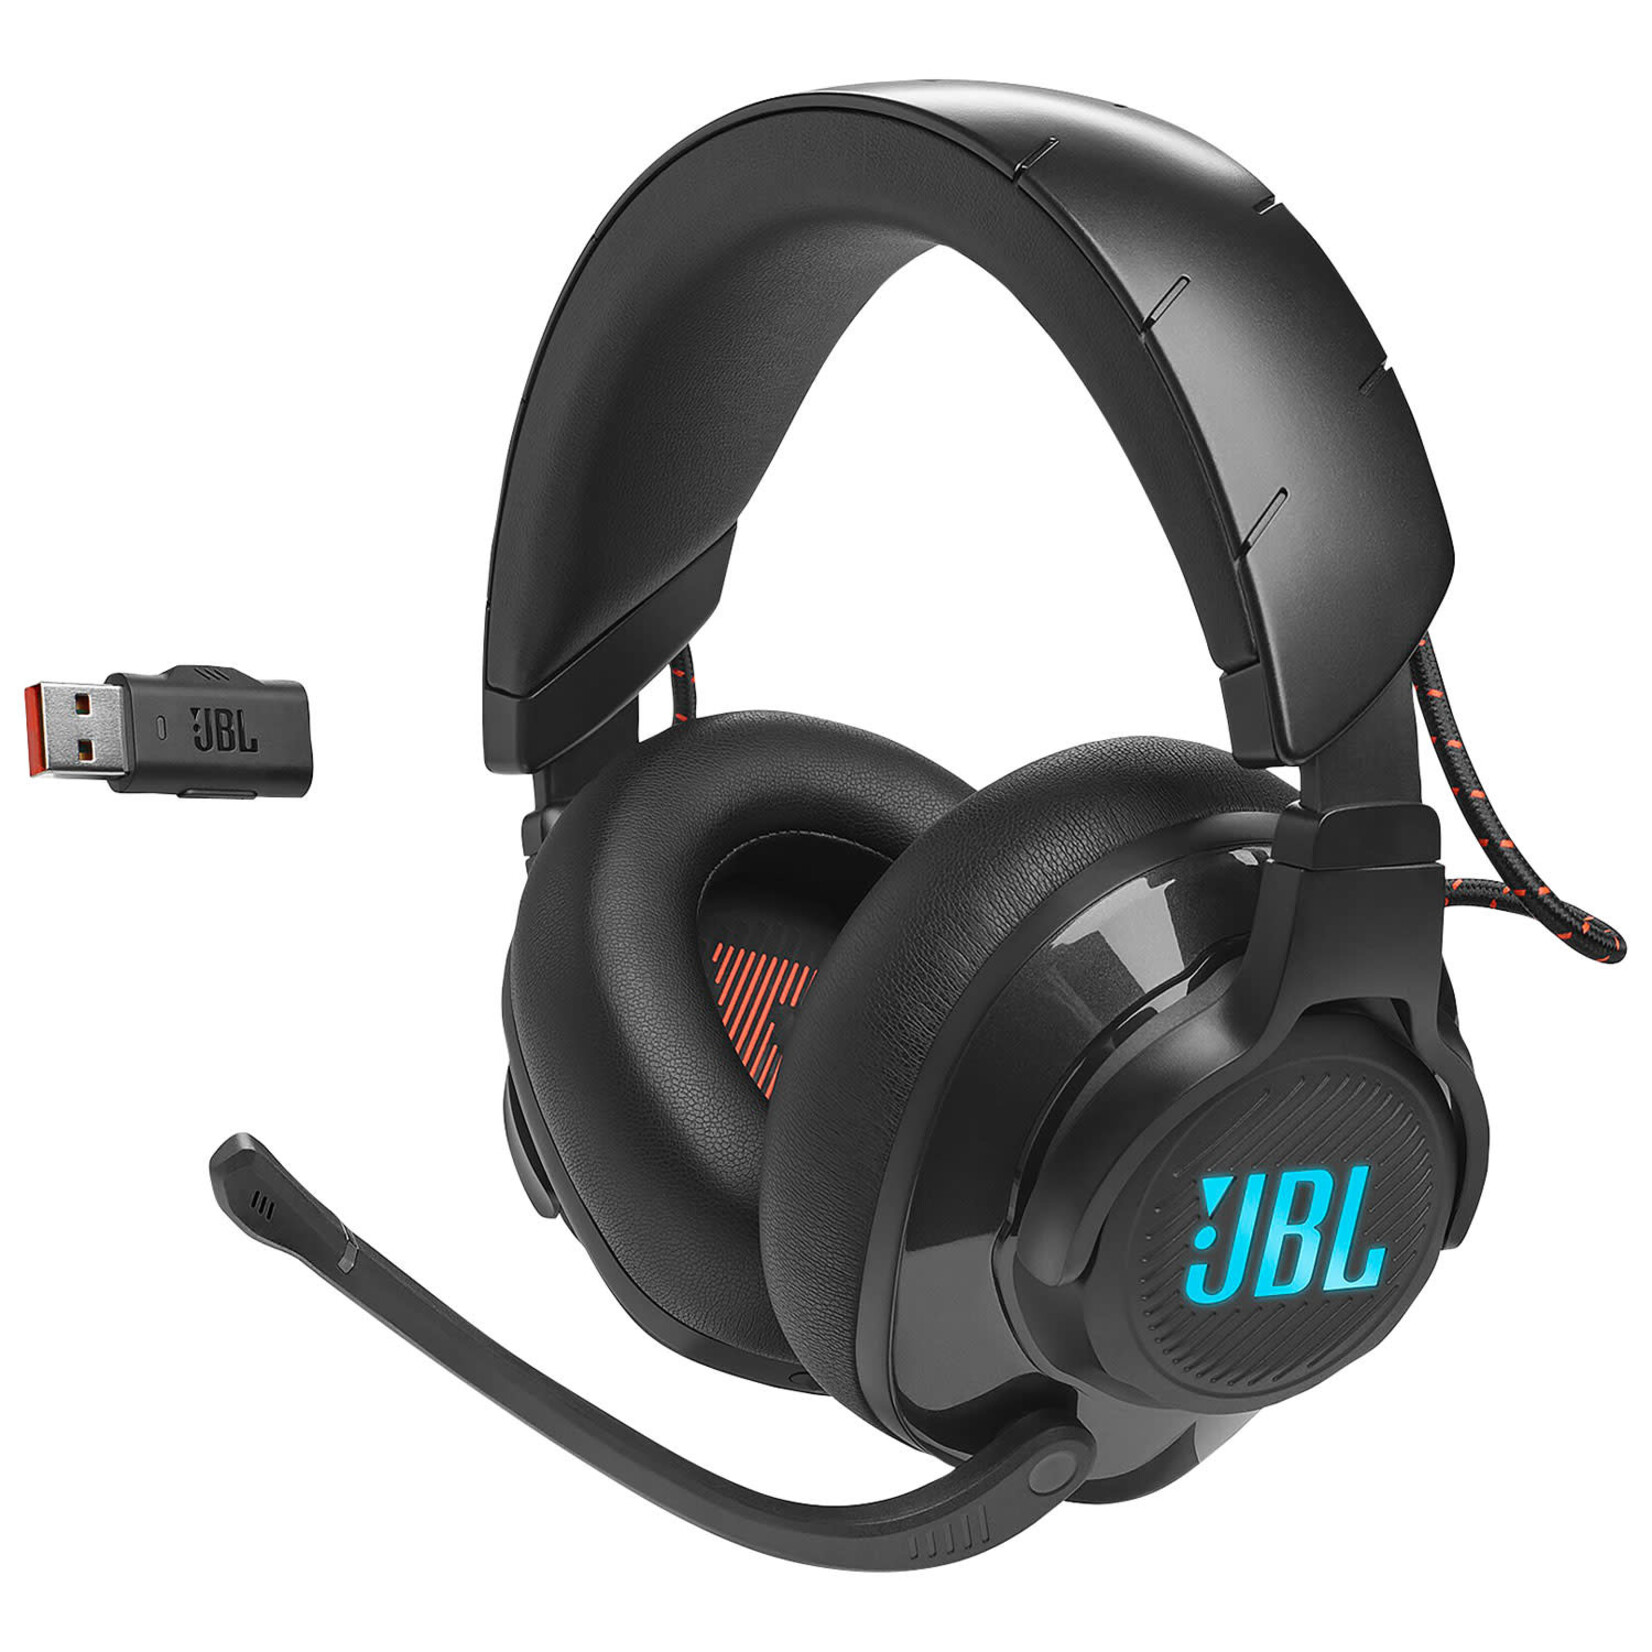 JBL JBL Quantum 610 over the ear Quantum Surround & DTS Wireless Gaming Headset